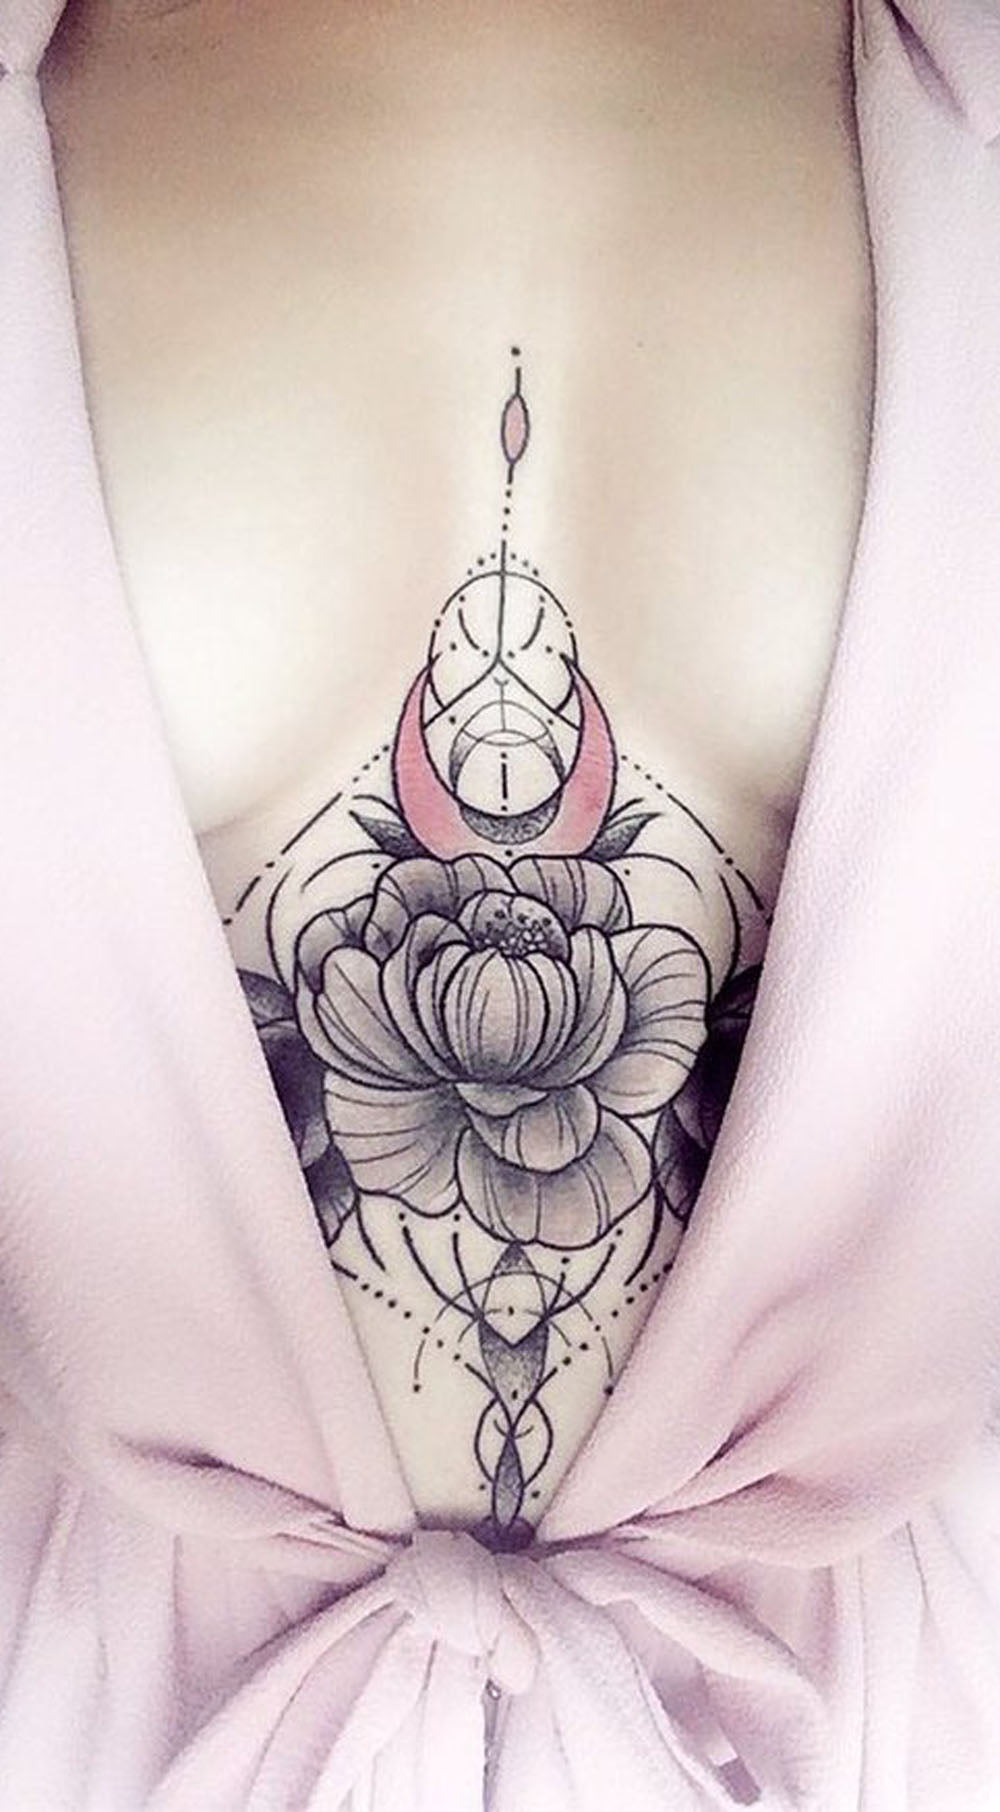 Unique Sternum Black Rose Underboob Mandala Tattoo Ideas for Women - ideas de tatuaje de esternón rosa para mujeres -  www.MyBodiArt.com